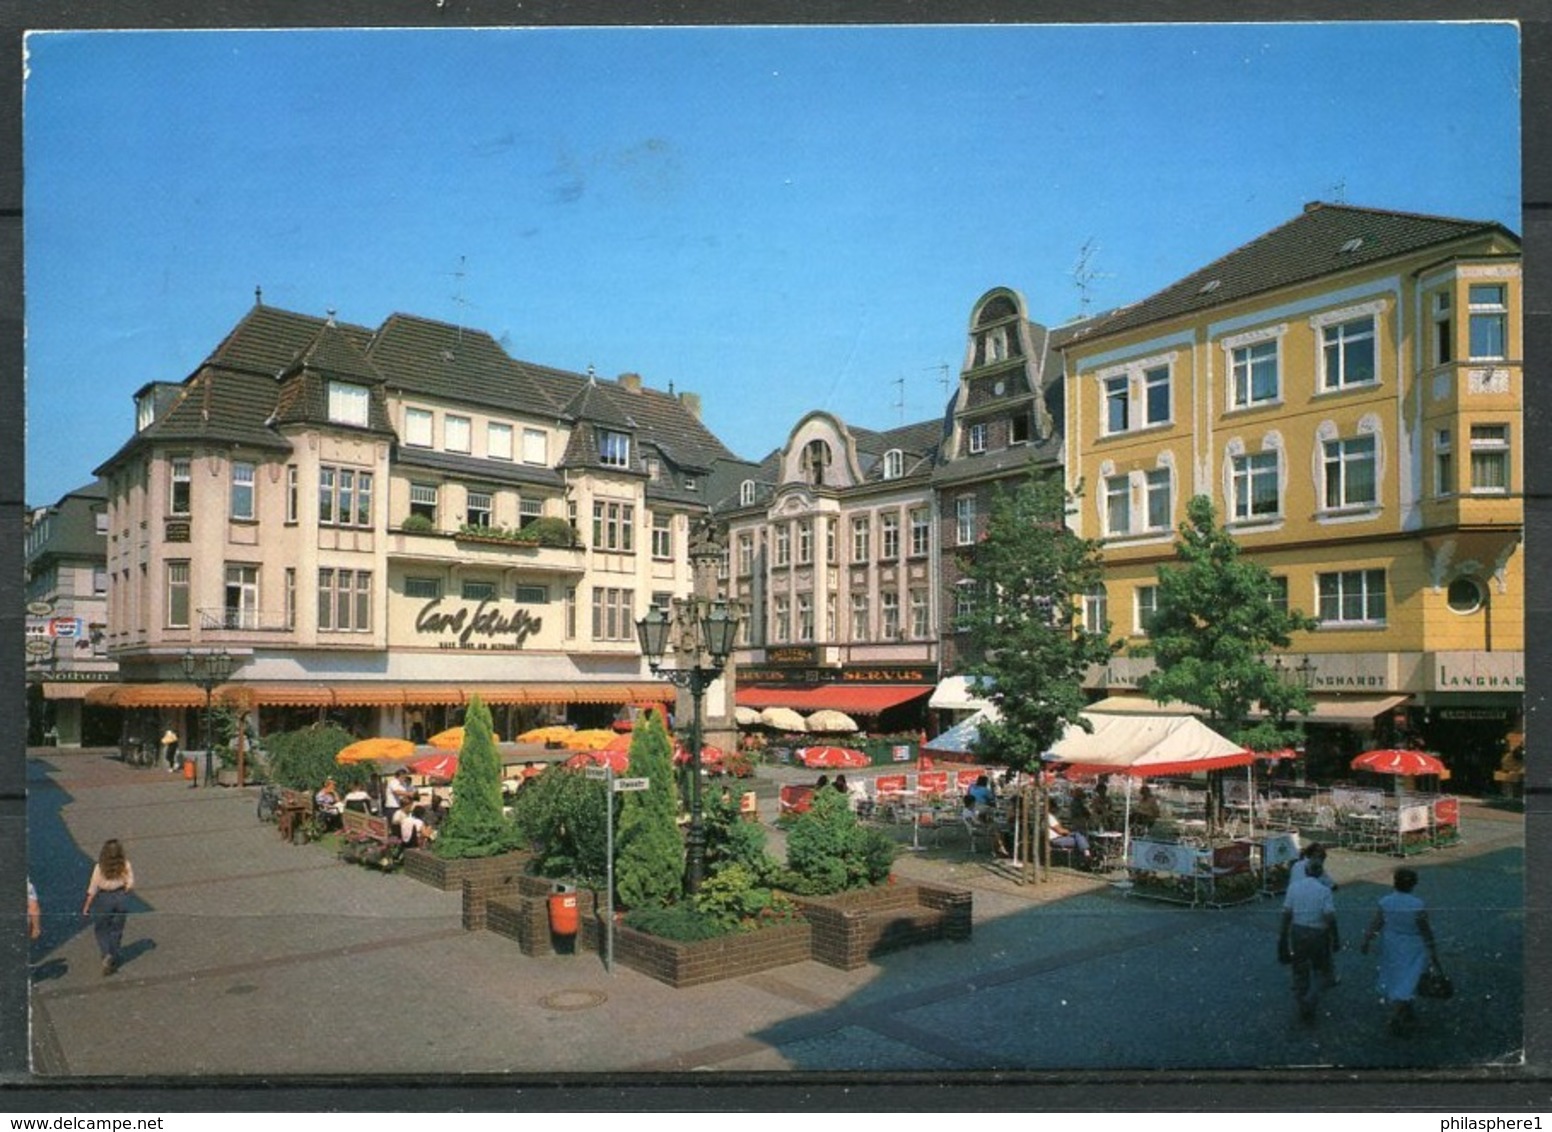 Moers / Altmarkt - Gel. 1991 - Krapohl-Verlag, Grevenbroich - Mörs